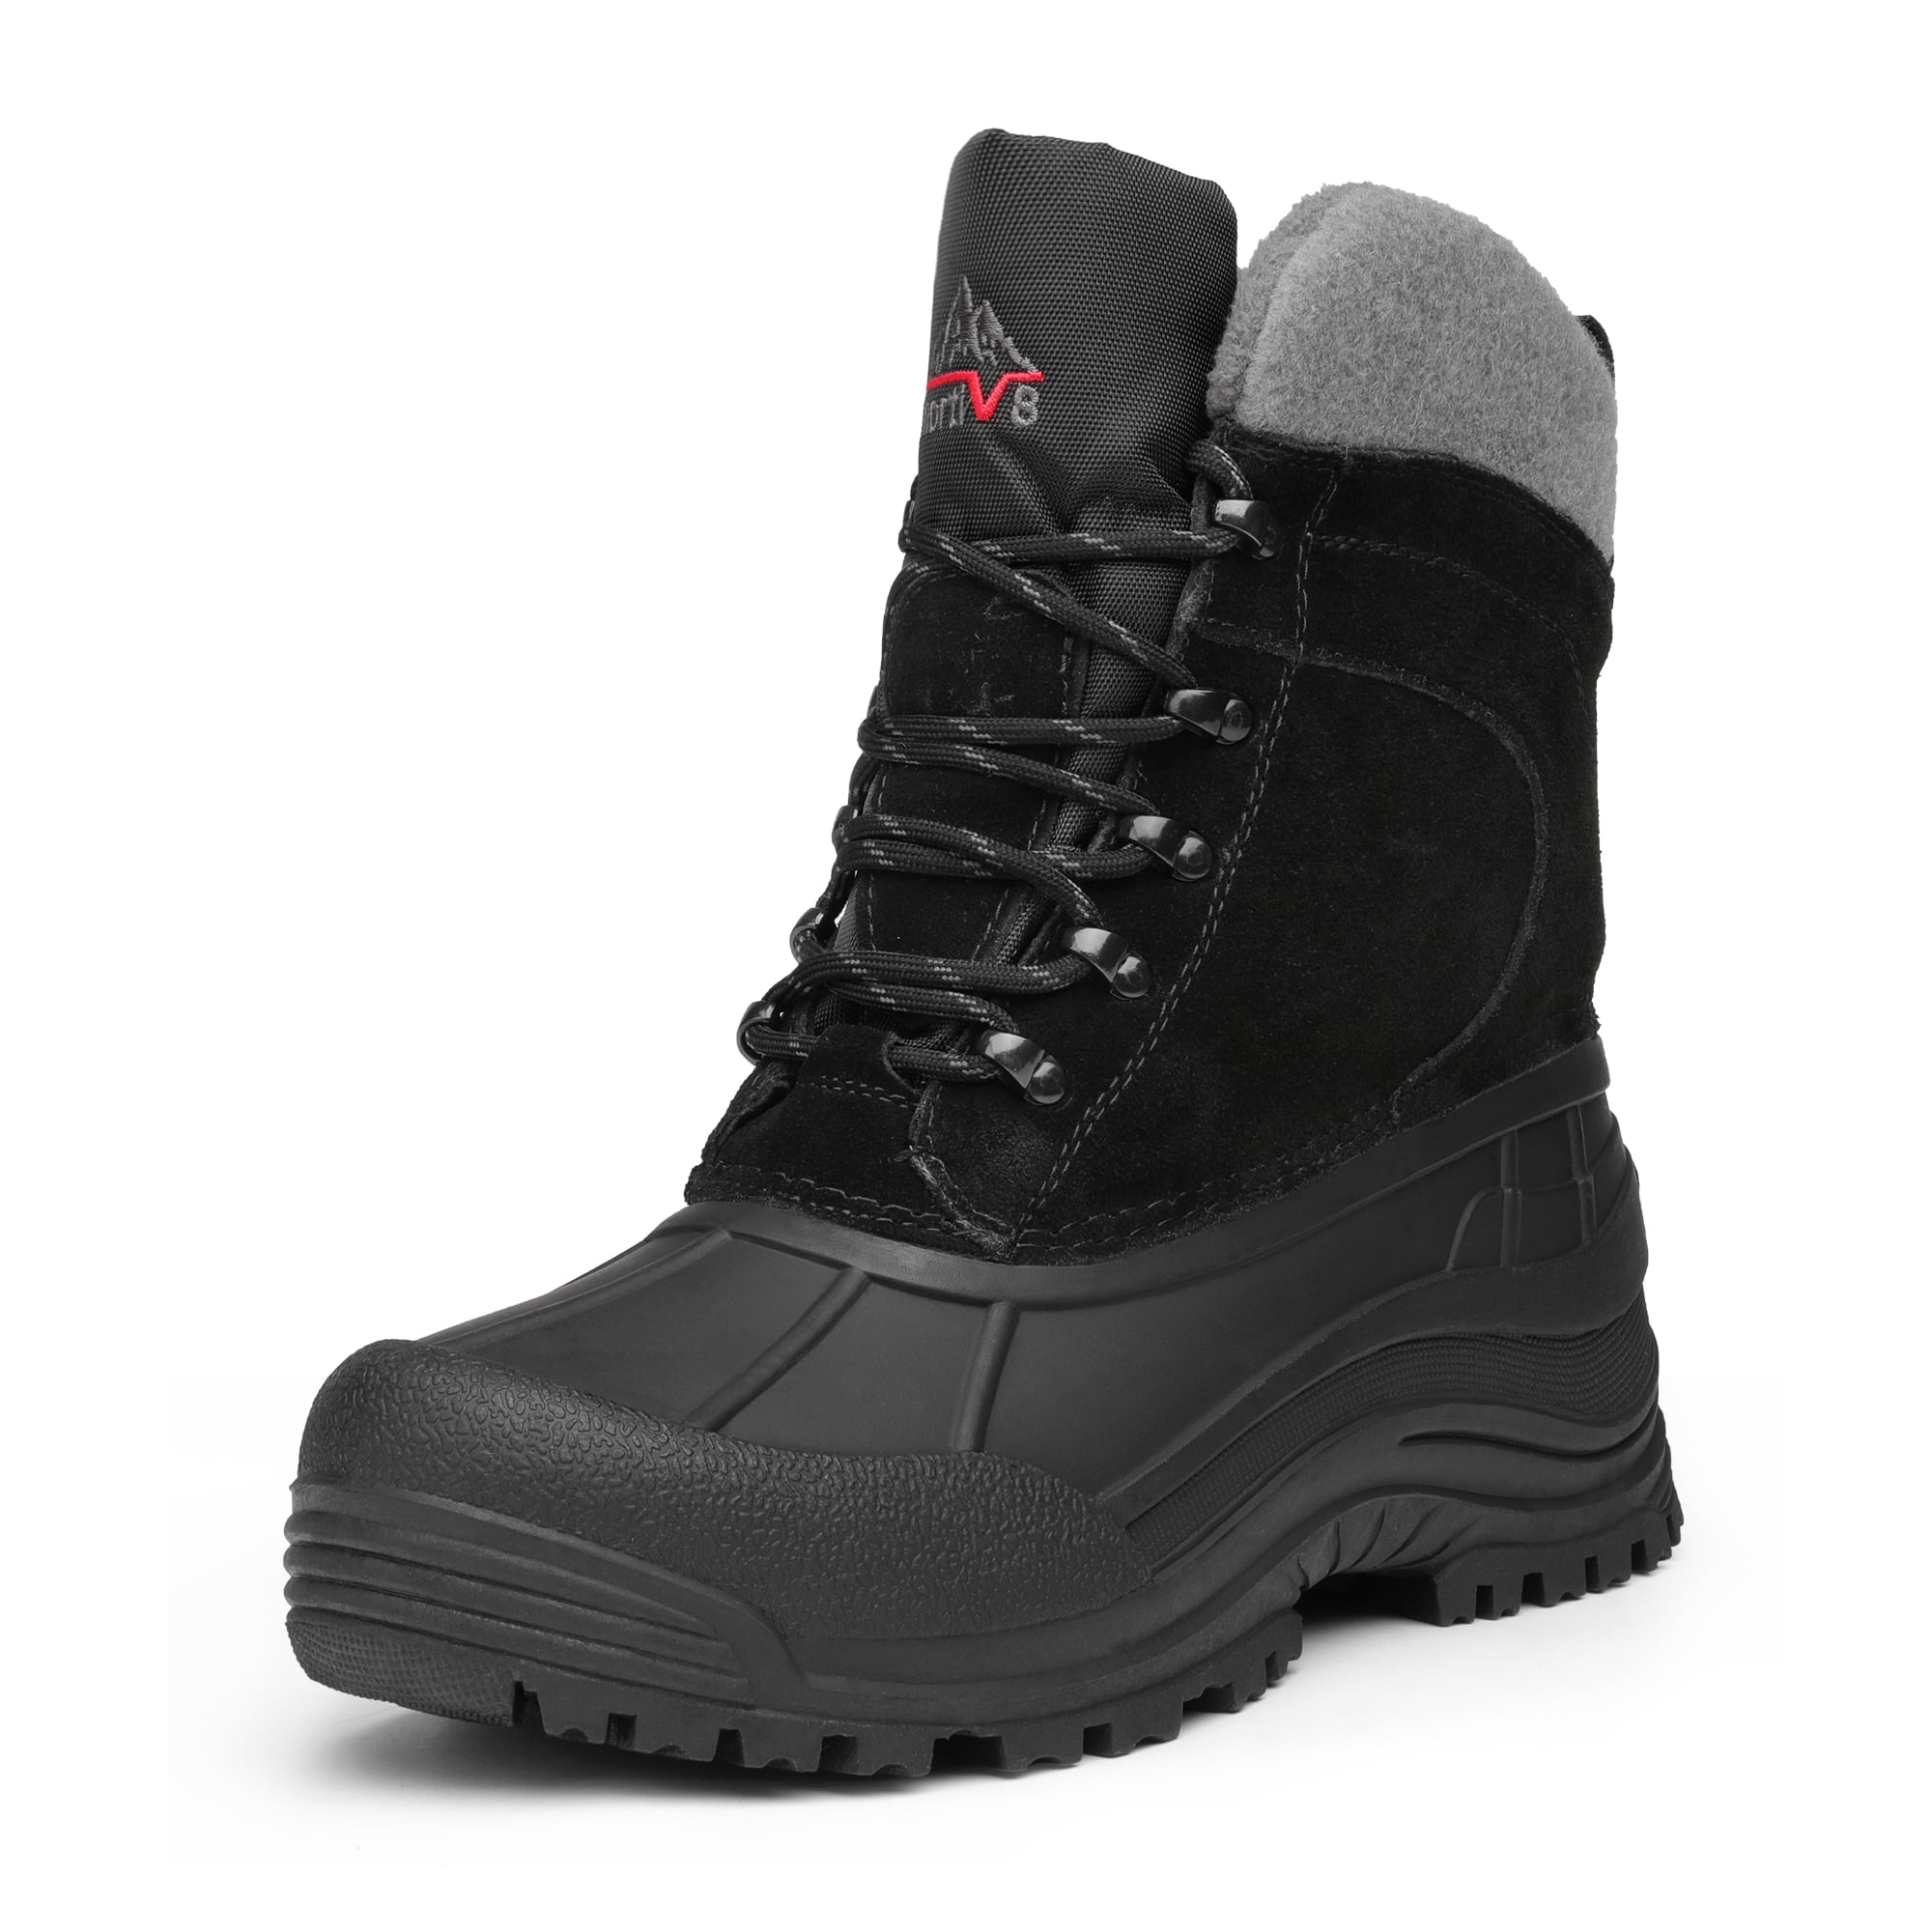 Nortiv8 Men's Winter Snow Boots Insulated Waterproof Work Boots Outdoor ...